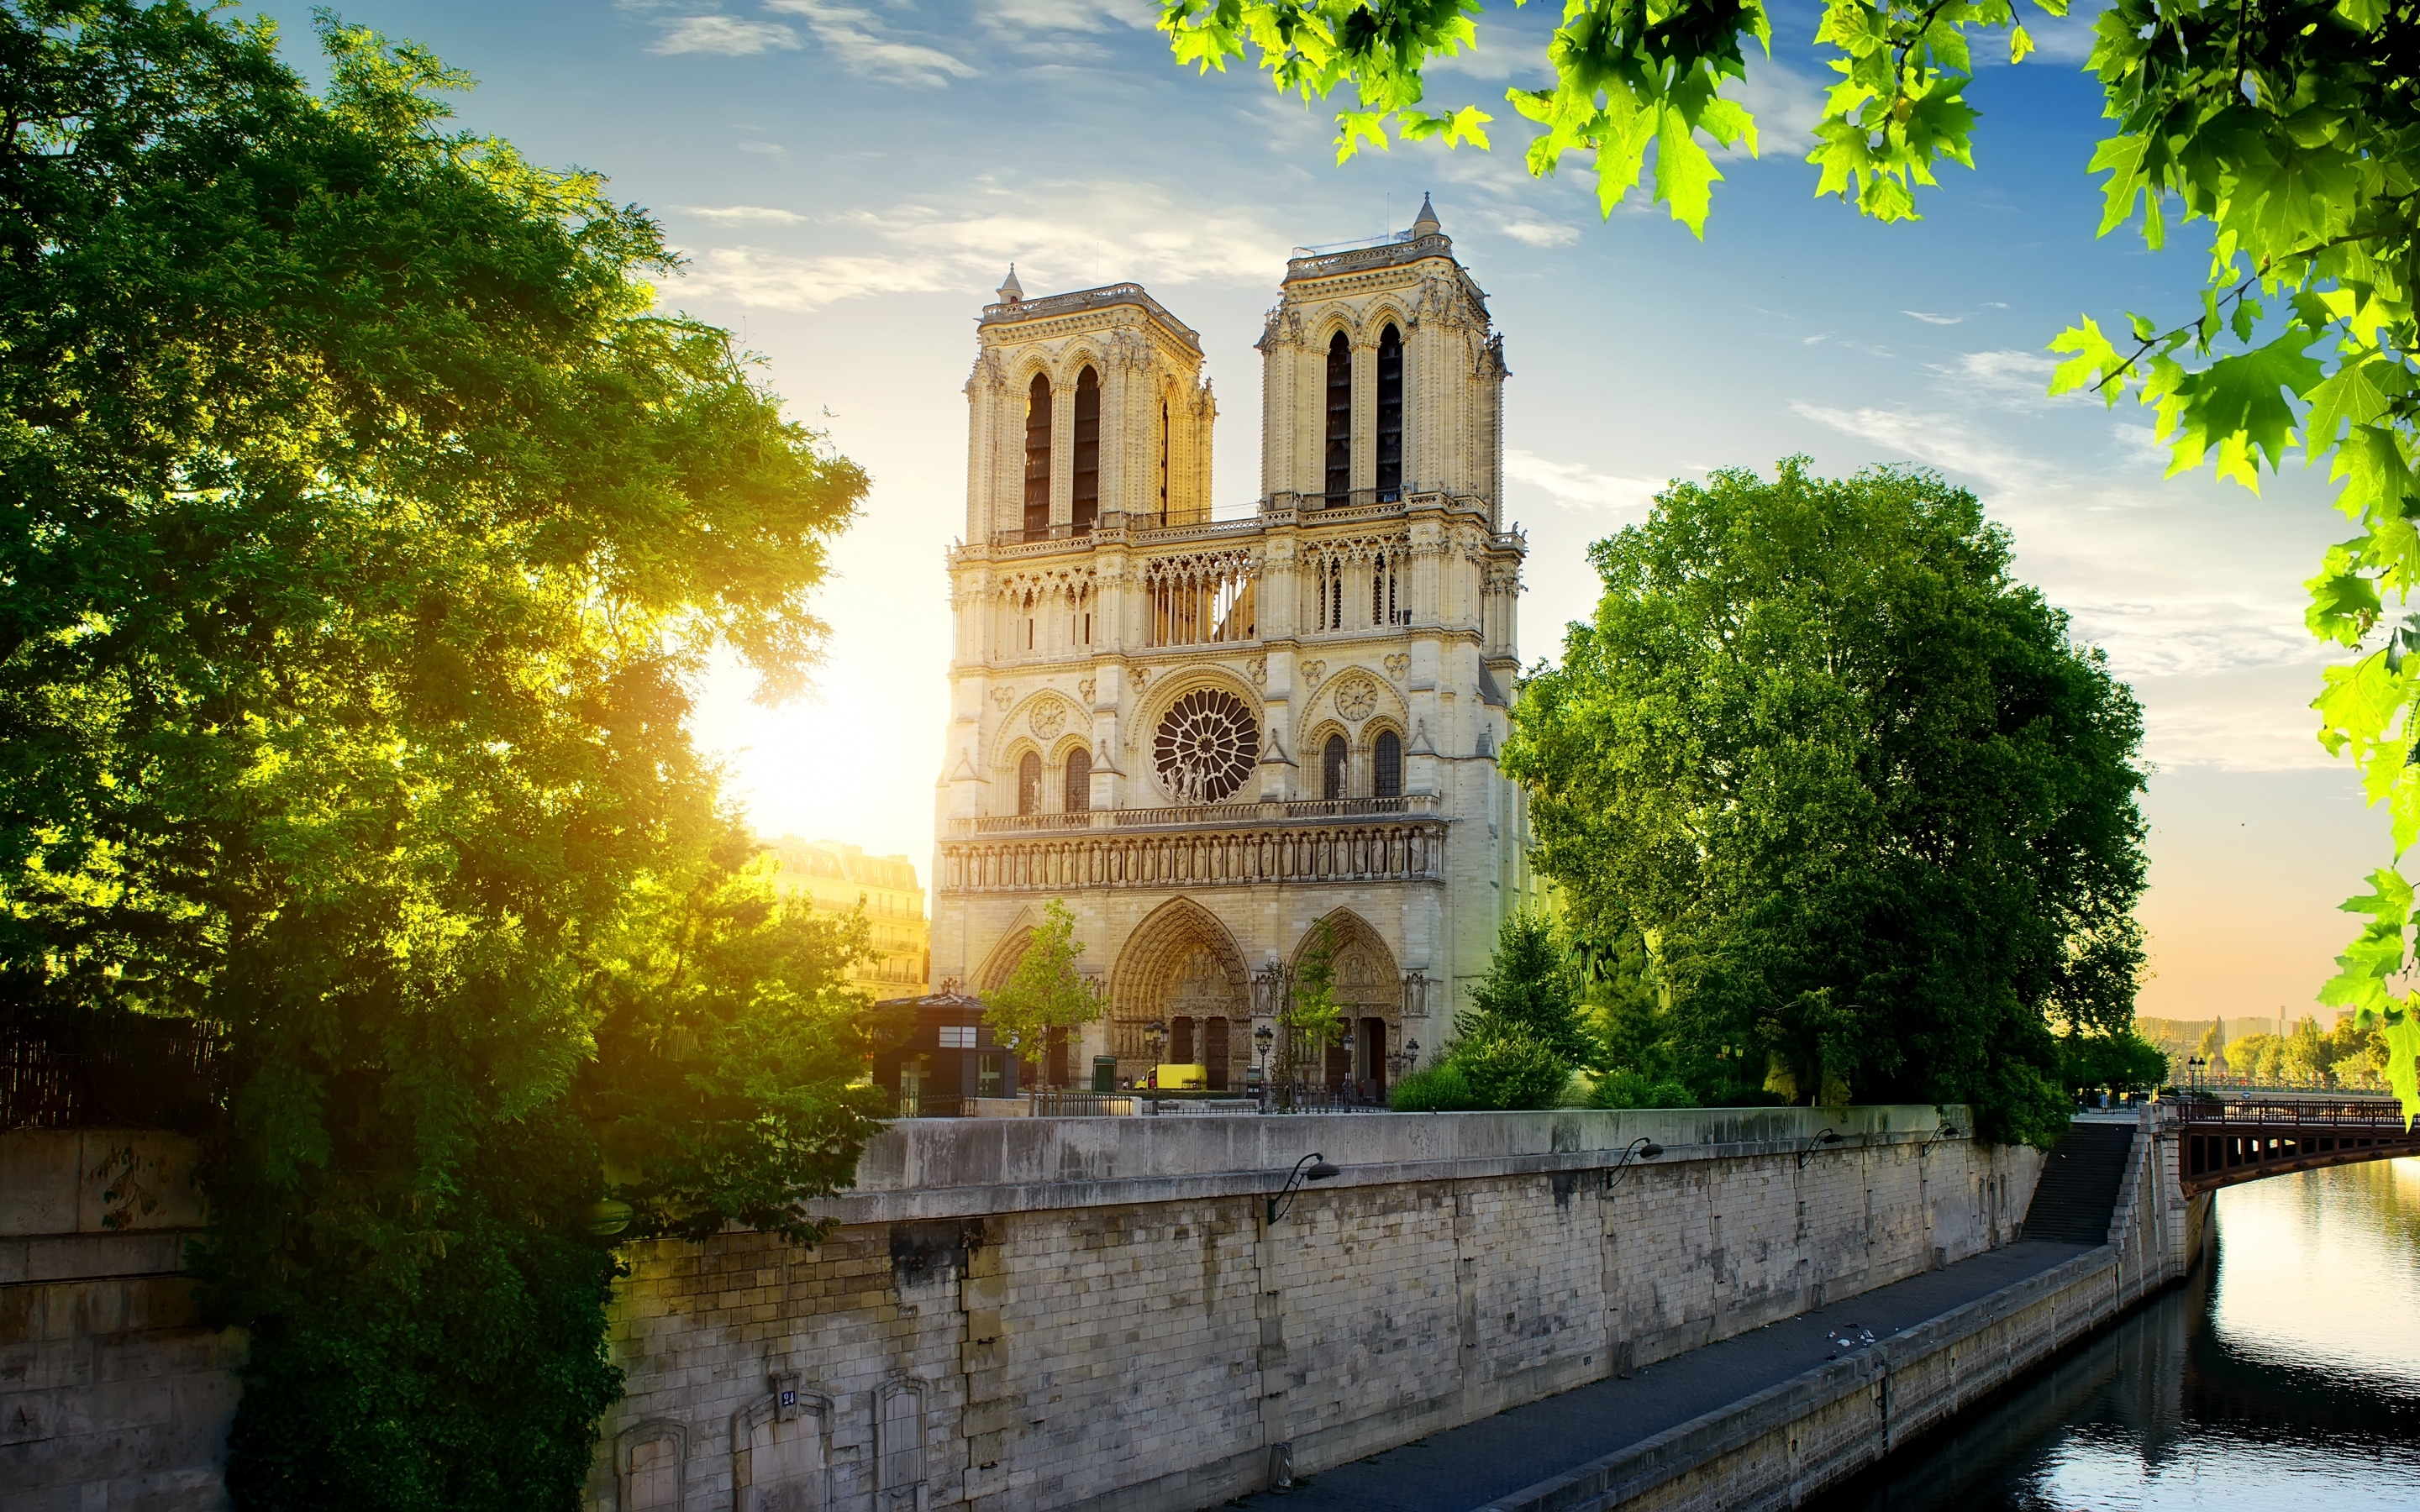 Katedra Notre Dame, Drzewa, Paryż, Francja